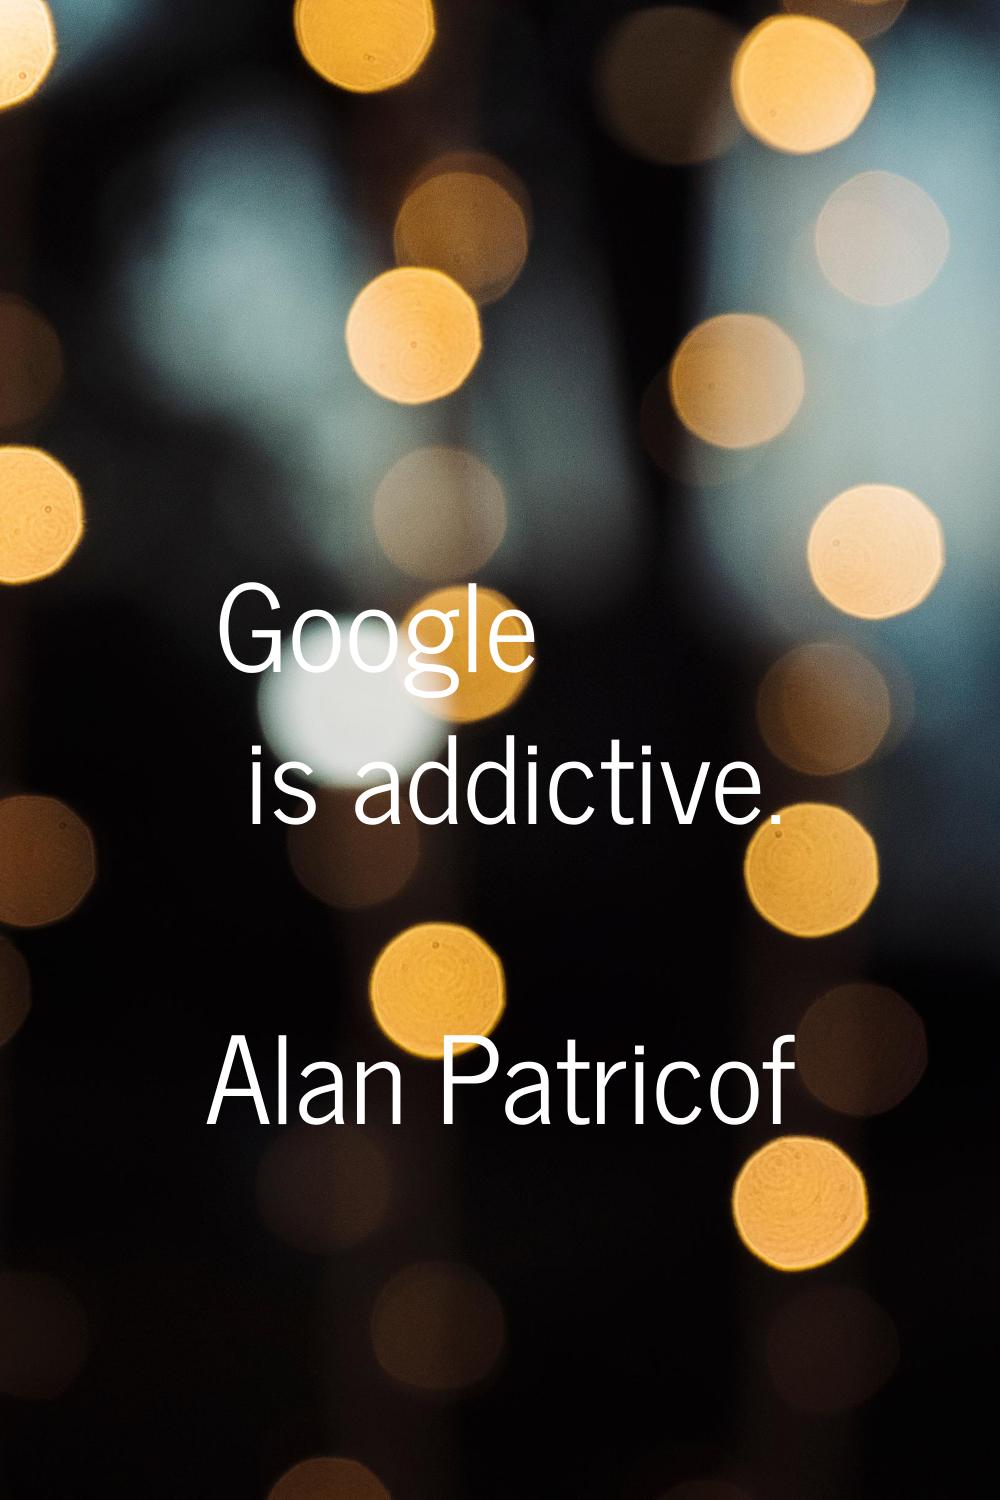 Google is addictive.